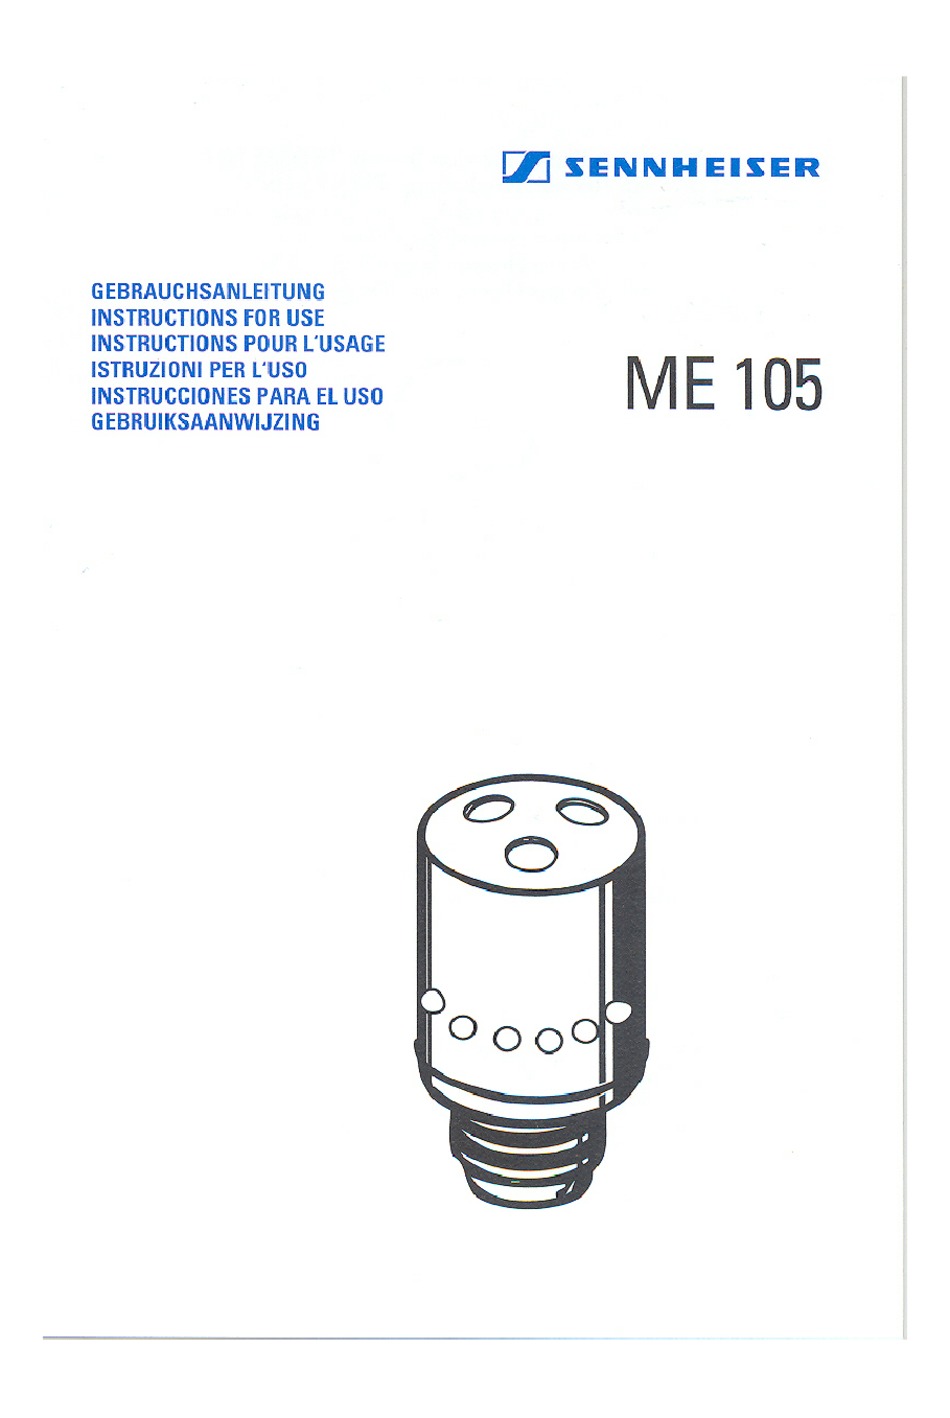 sennheiser bf 1051 manual